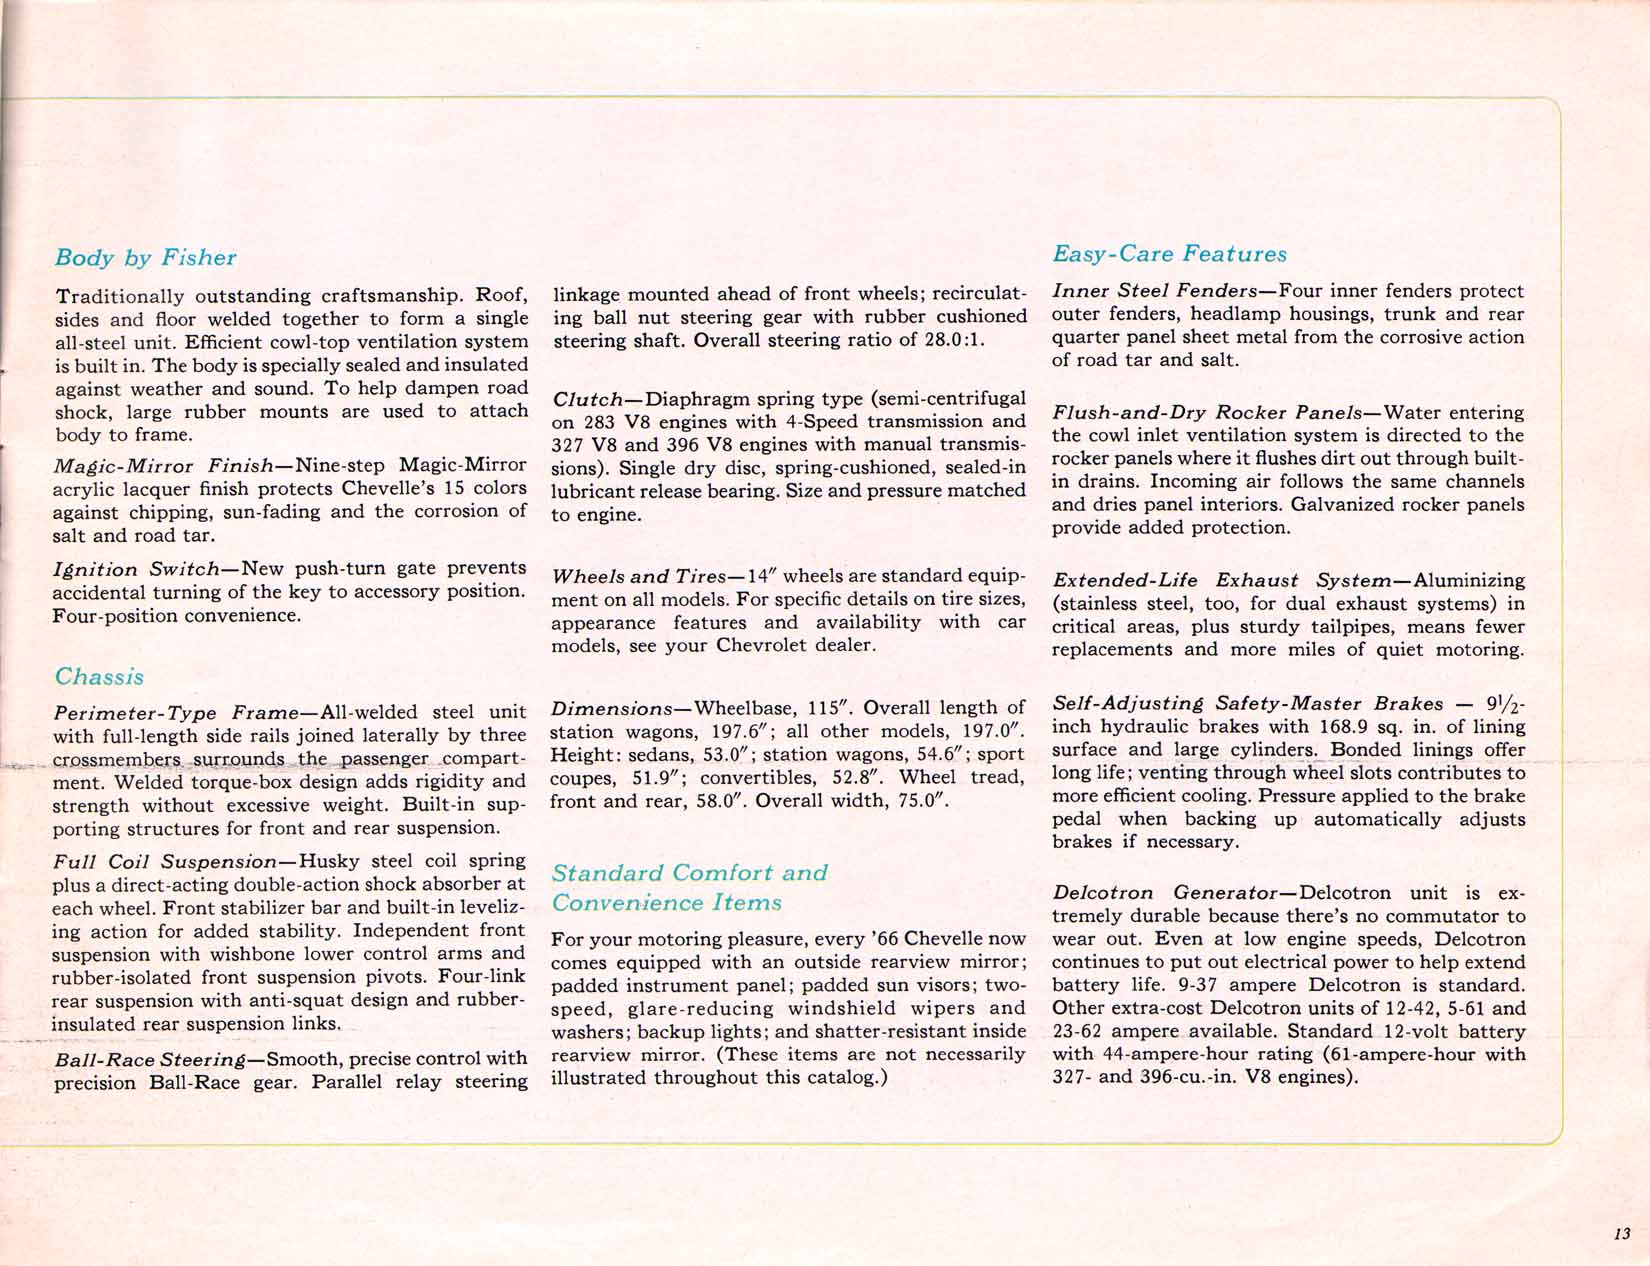 1966 Chev Chevelle Brochure Page 14